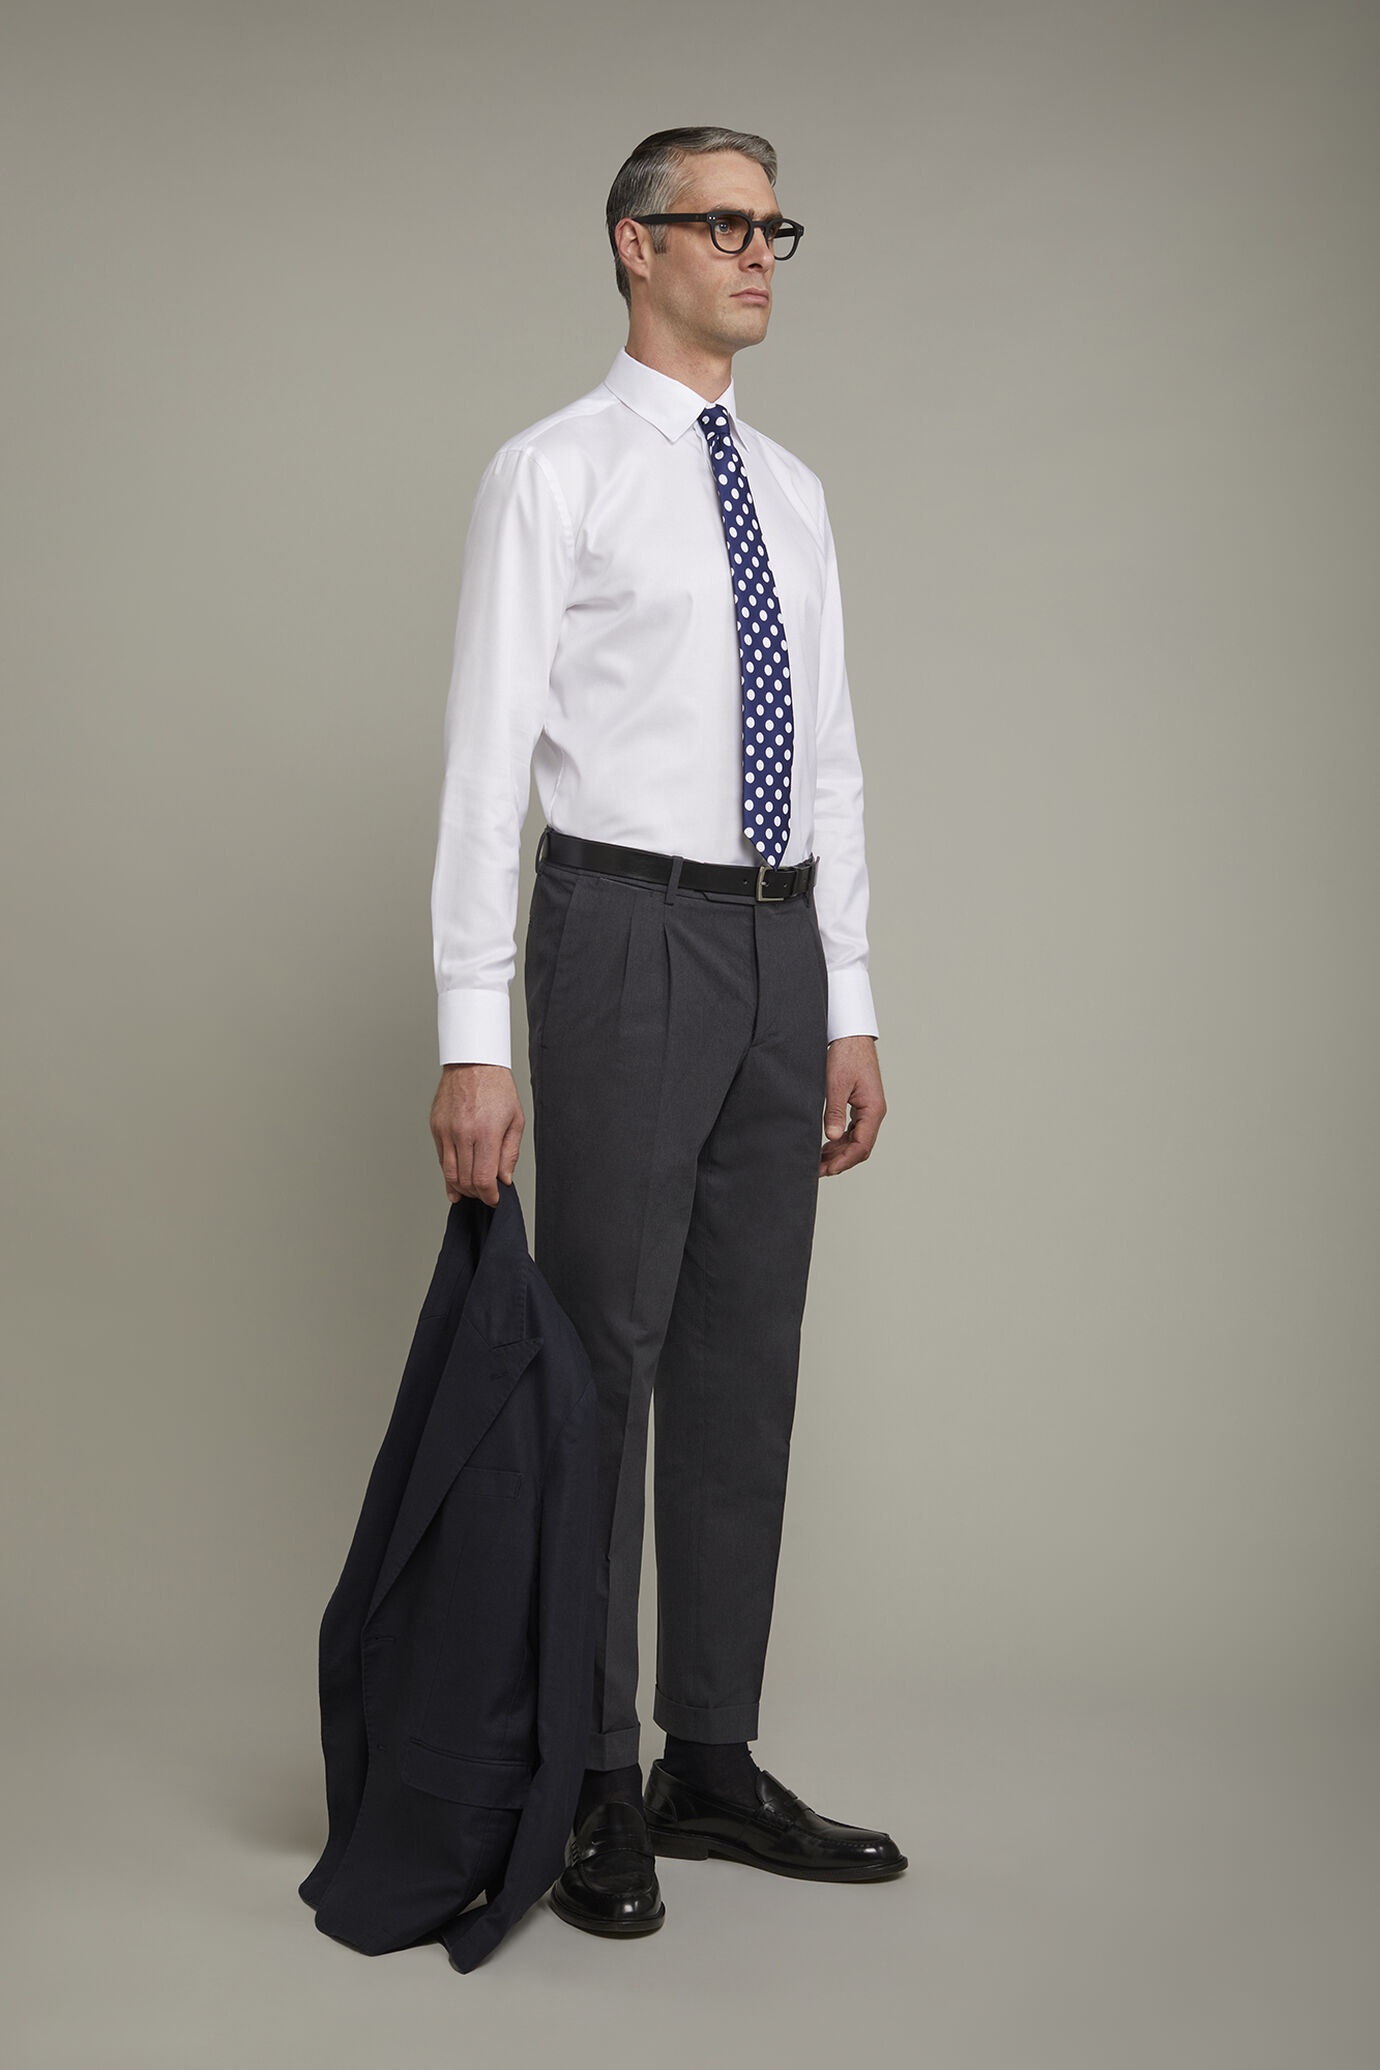 Men's shirt classic collar 100% cotton lightweight oxford fabric regular fit image number 1